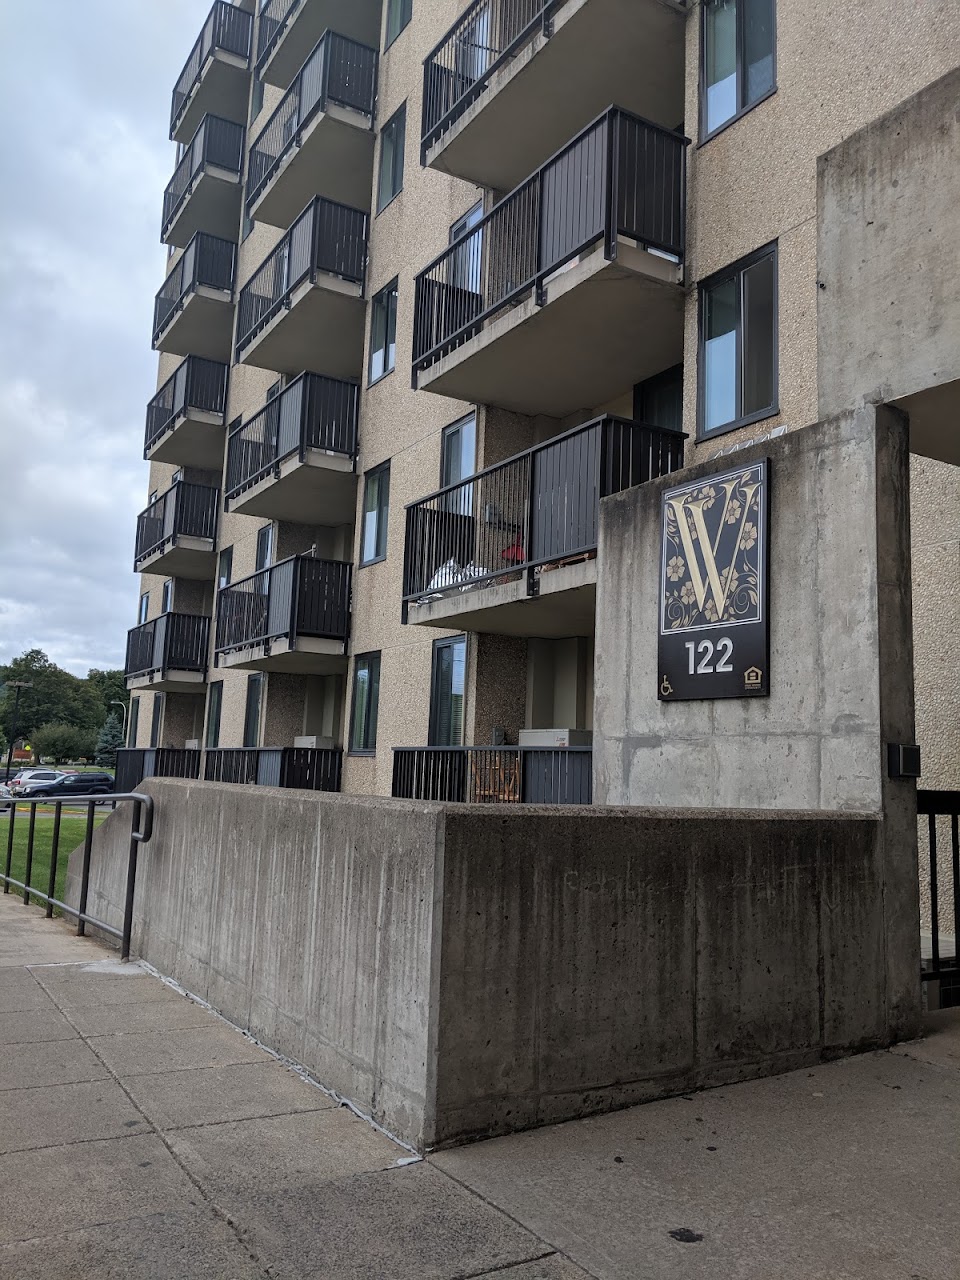 Photo of VALLEY VISTA APTS. Affordable housing located at 122 WEST SENECA TPKE SYRACUSE, NY 13205